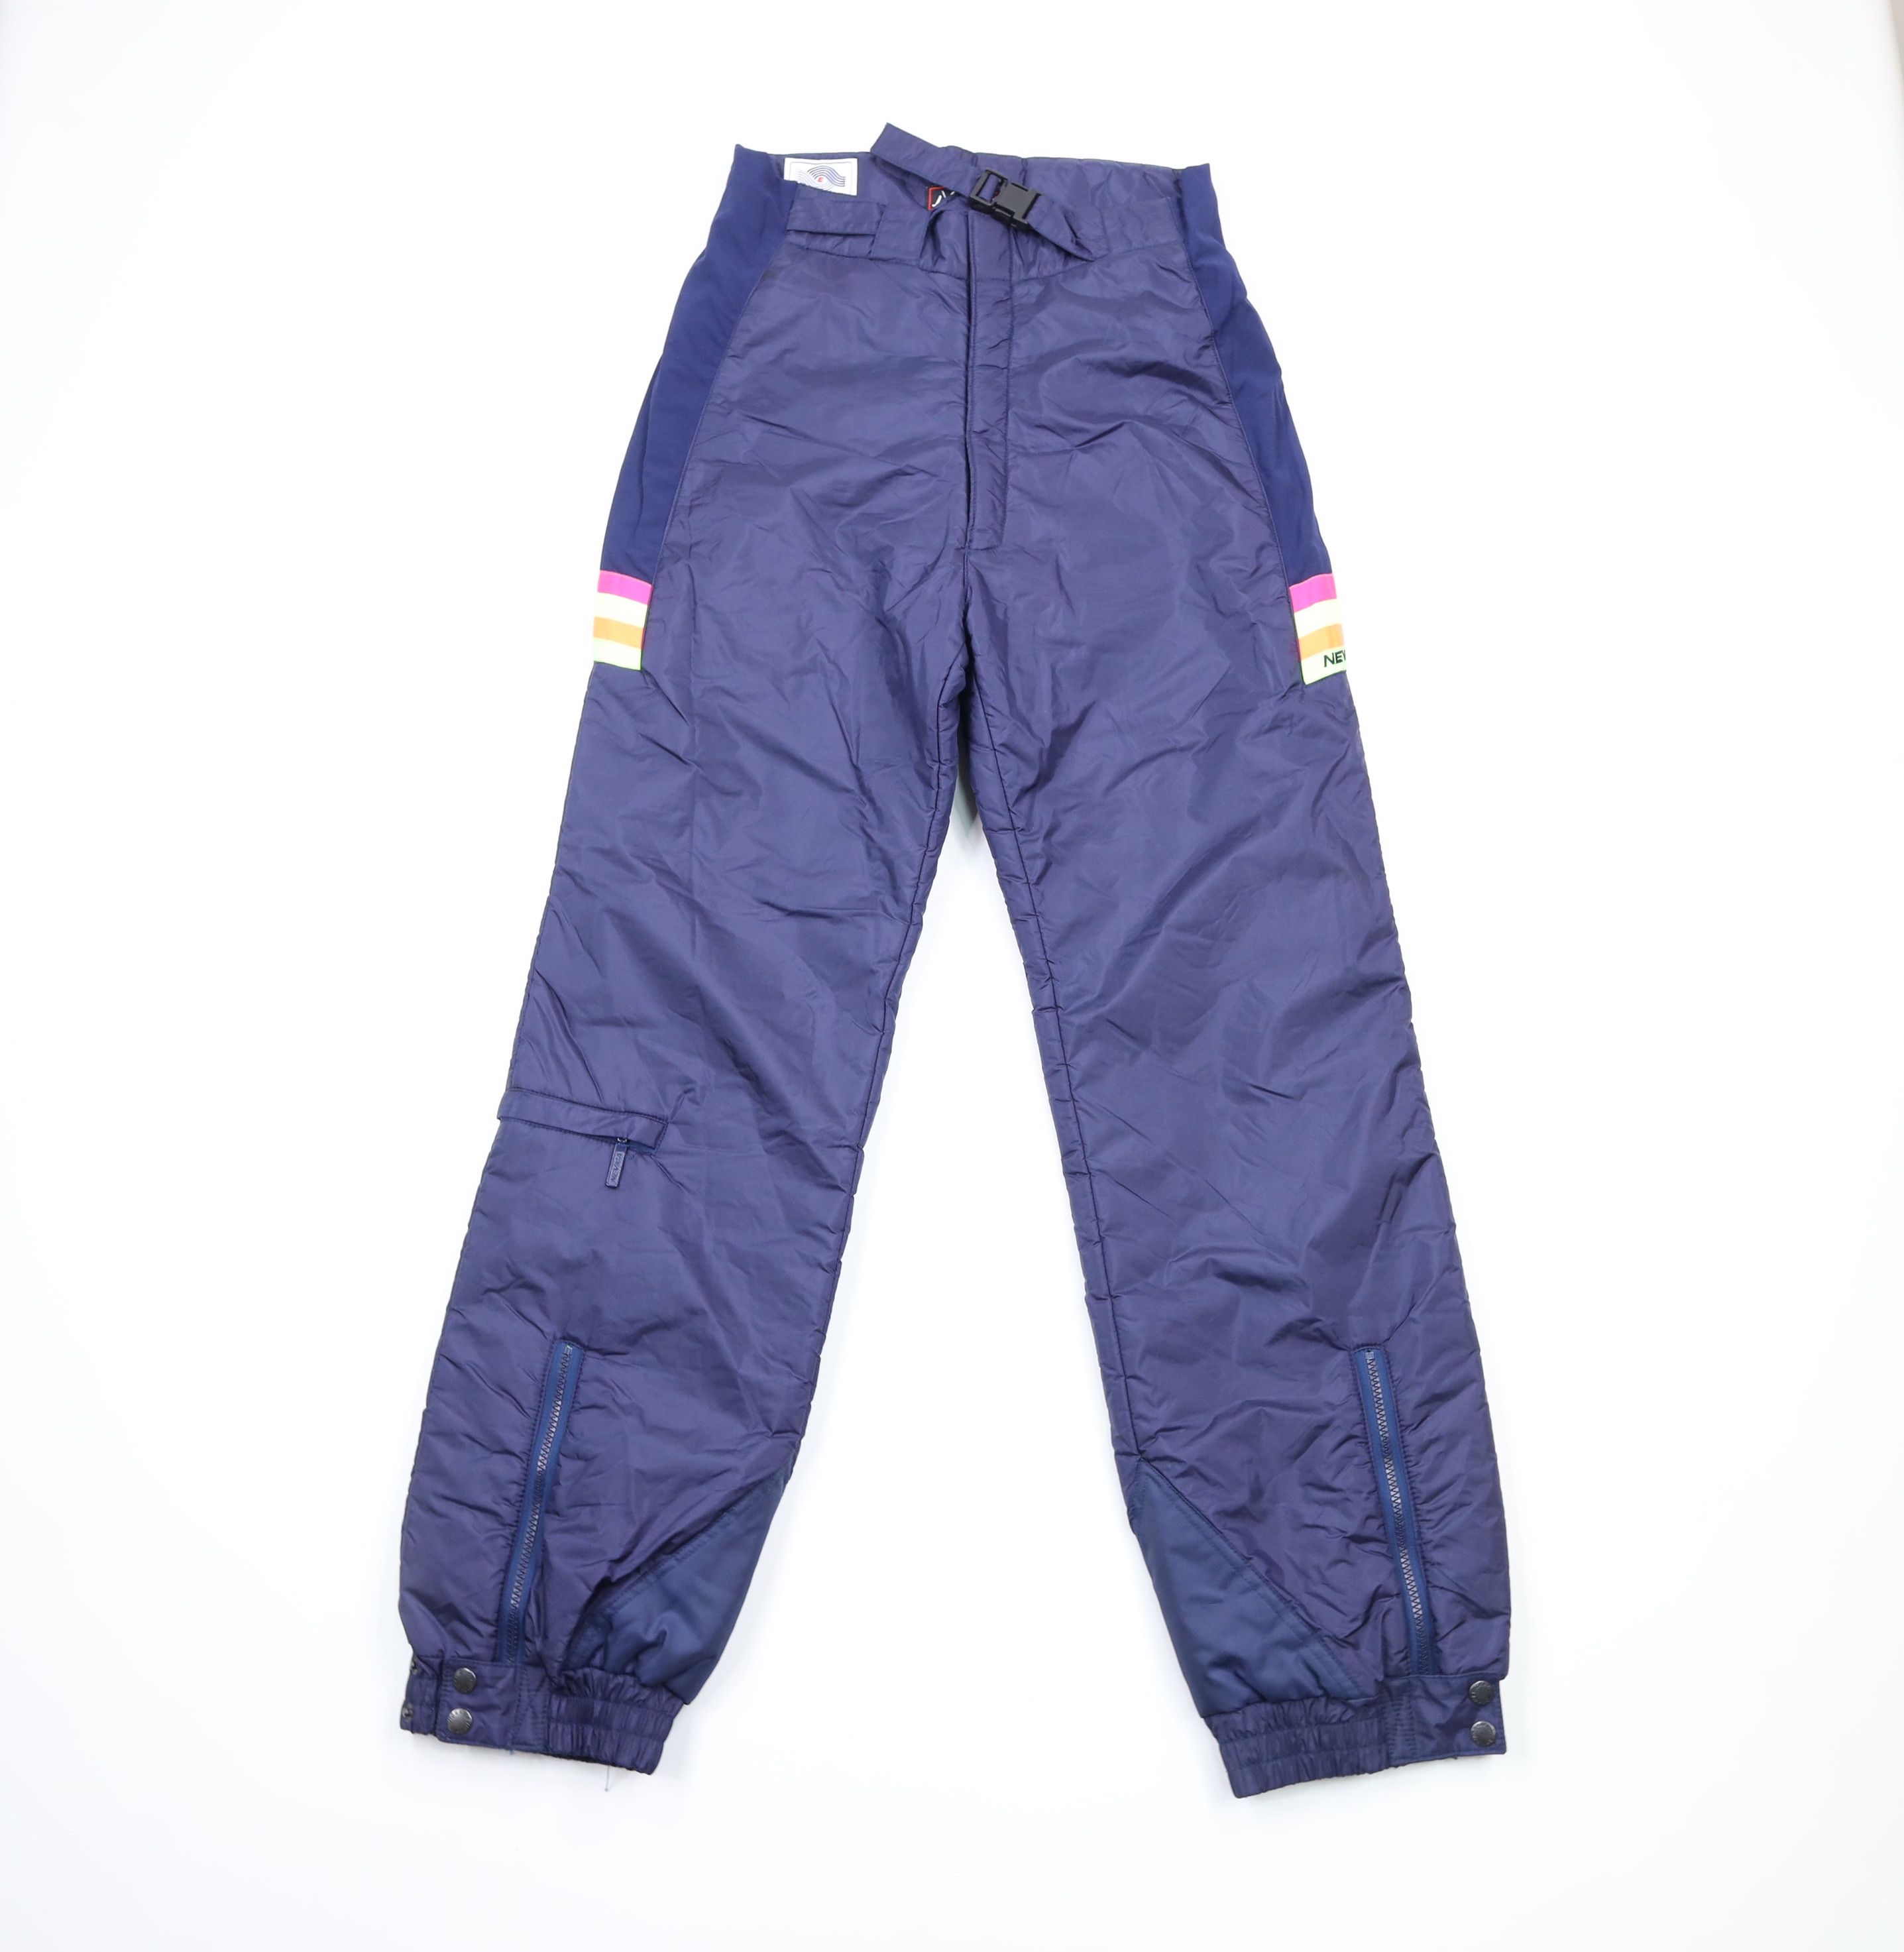 Vintage Vintage 90s Streetwear Cuffed Winter Snow Pants Navy Blue Size US 30 / EU 46 - 1 Preview